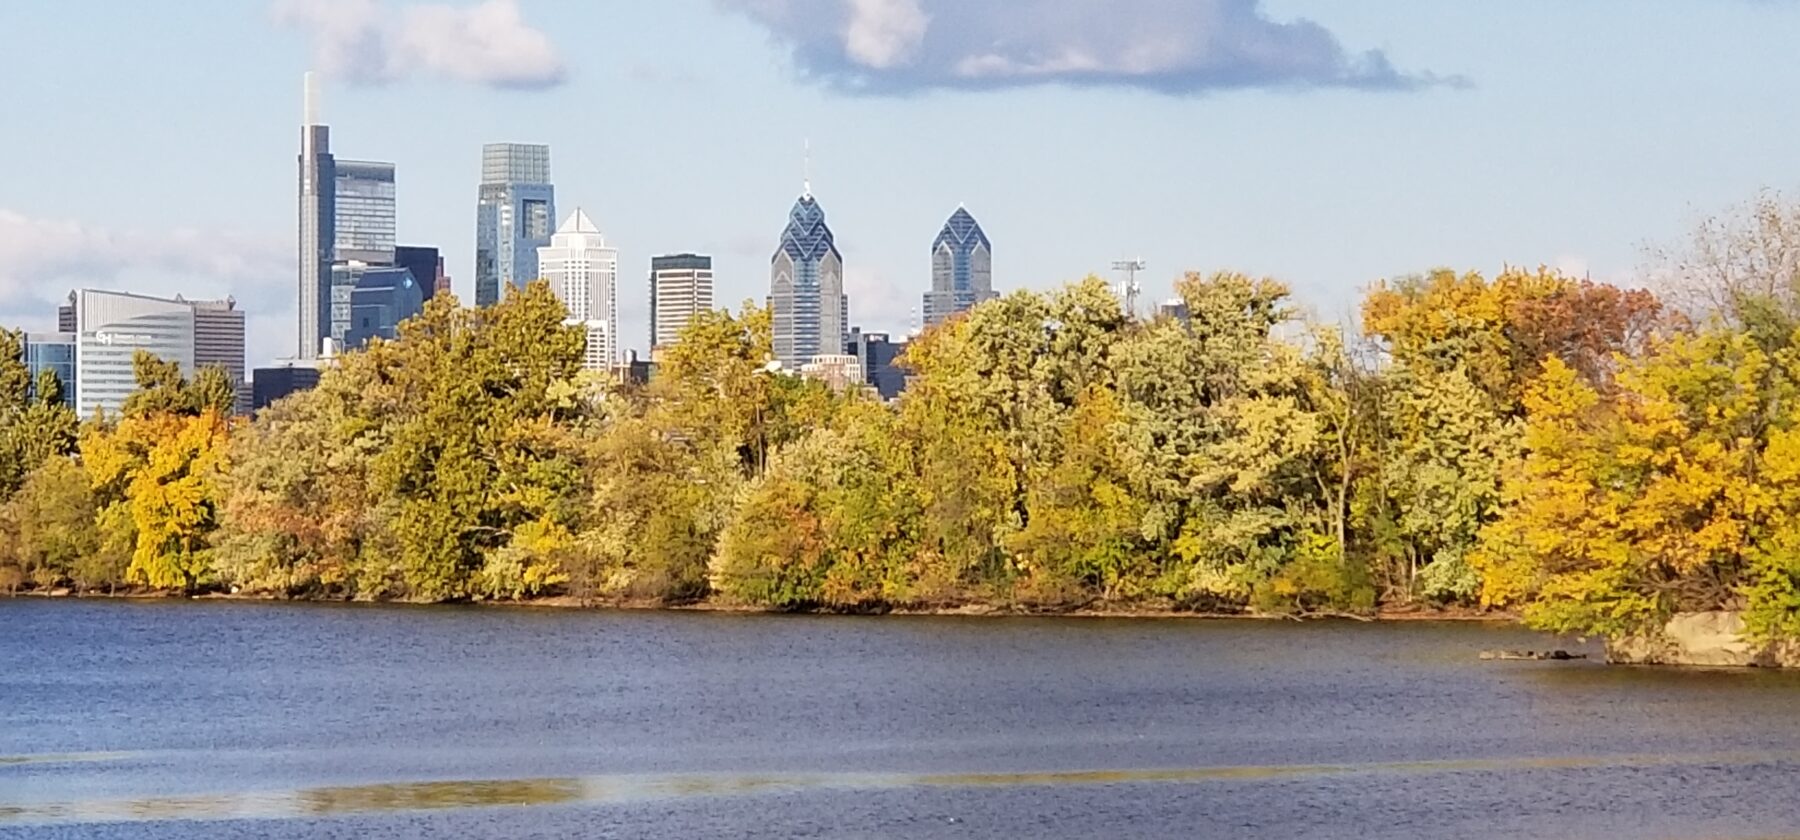 The Schuylkill River looking north towards the Philadelphia skyline.